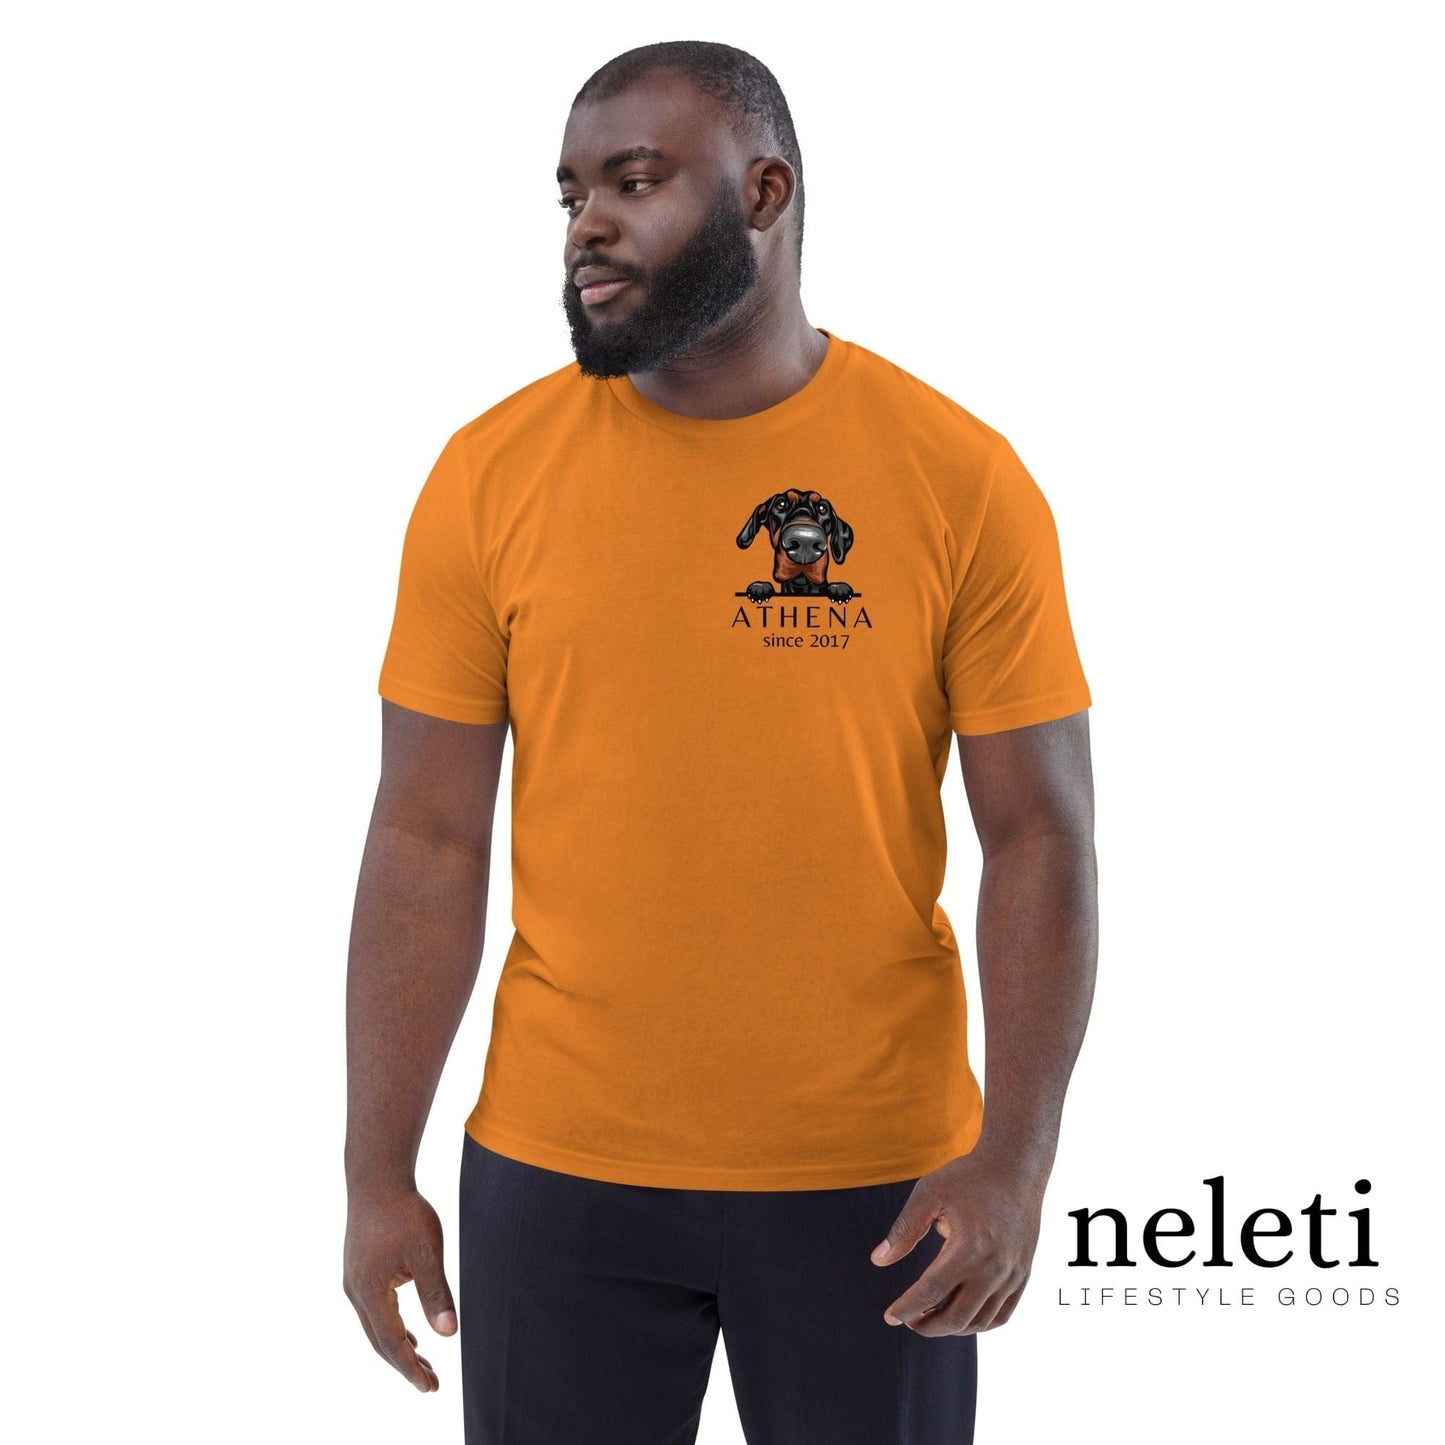 neleti.com-custom-day-fall-shirt-for-dog-dad